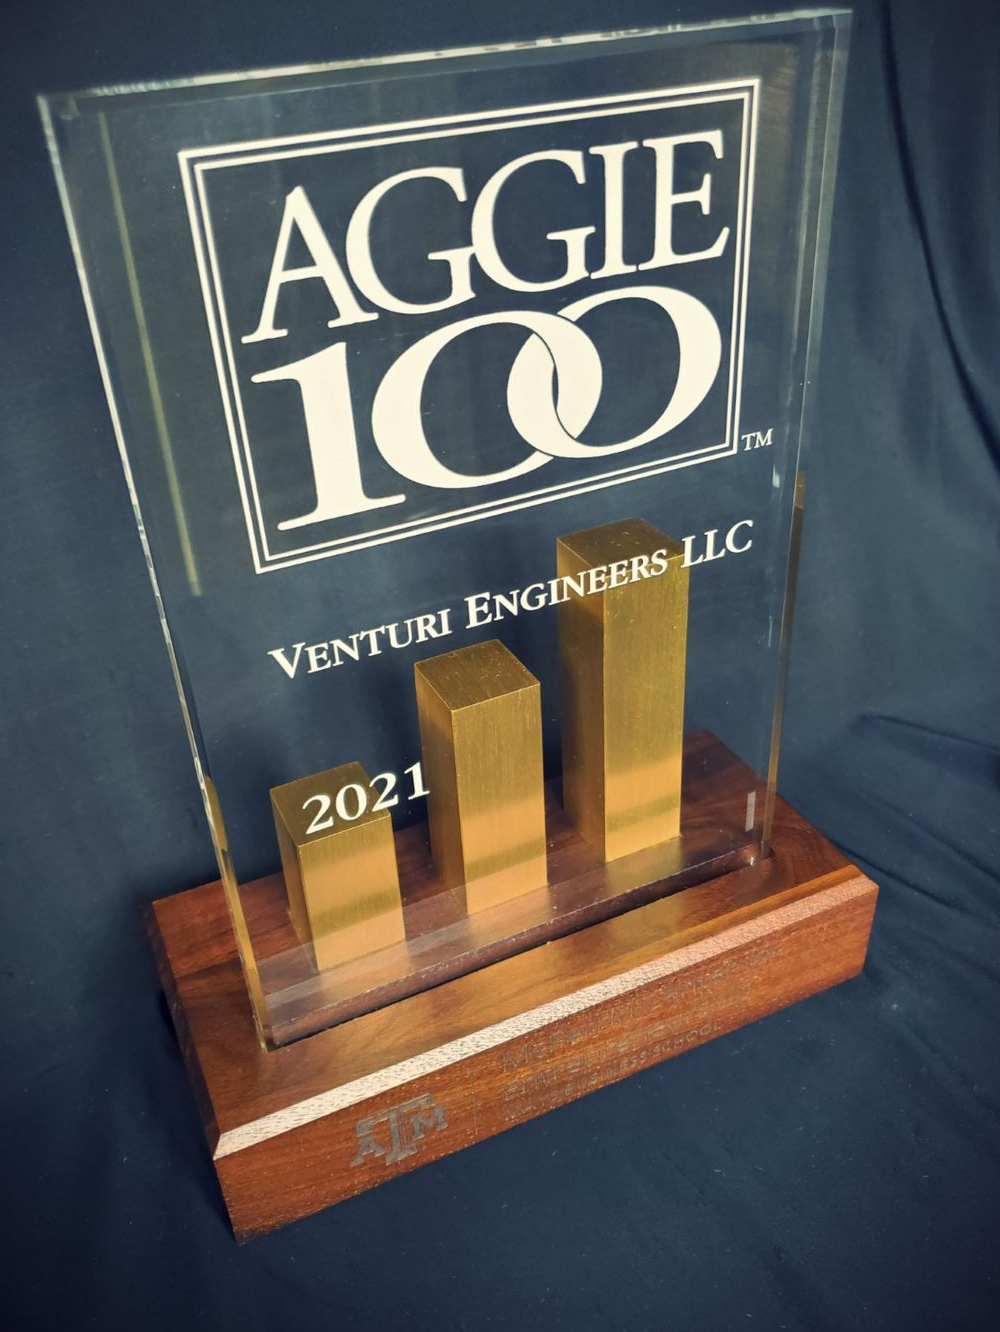 Aggie 100 awarded to Venturi Enginers 2021